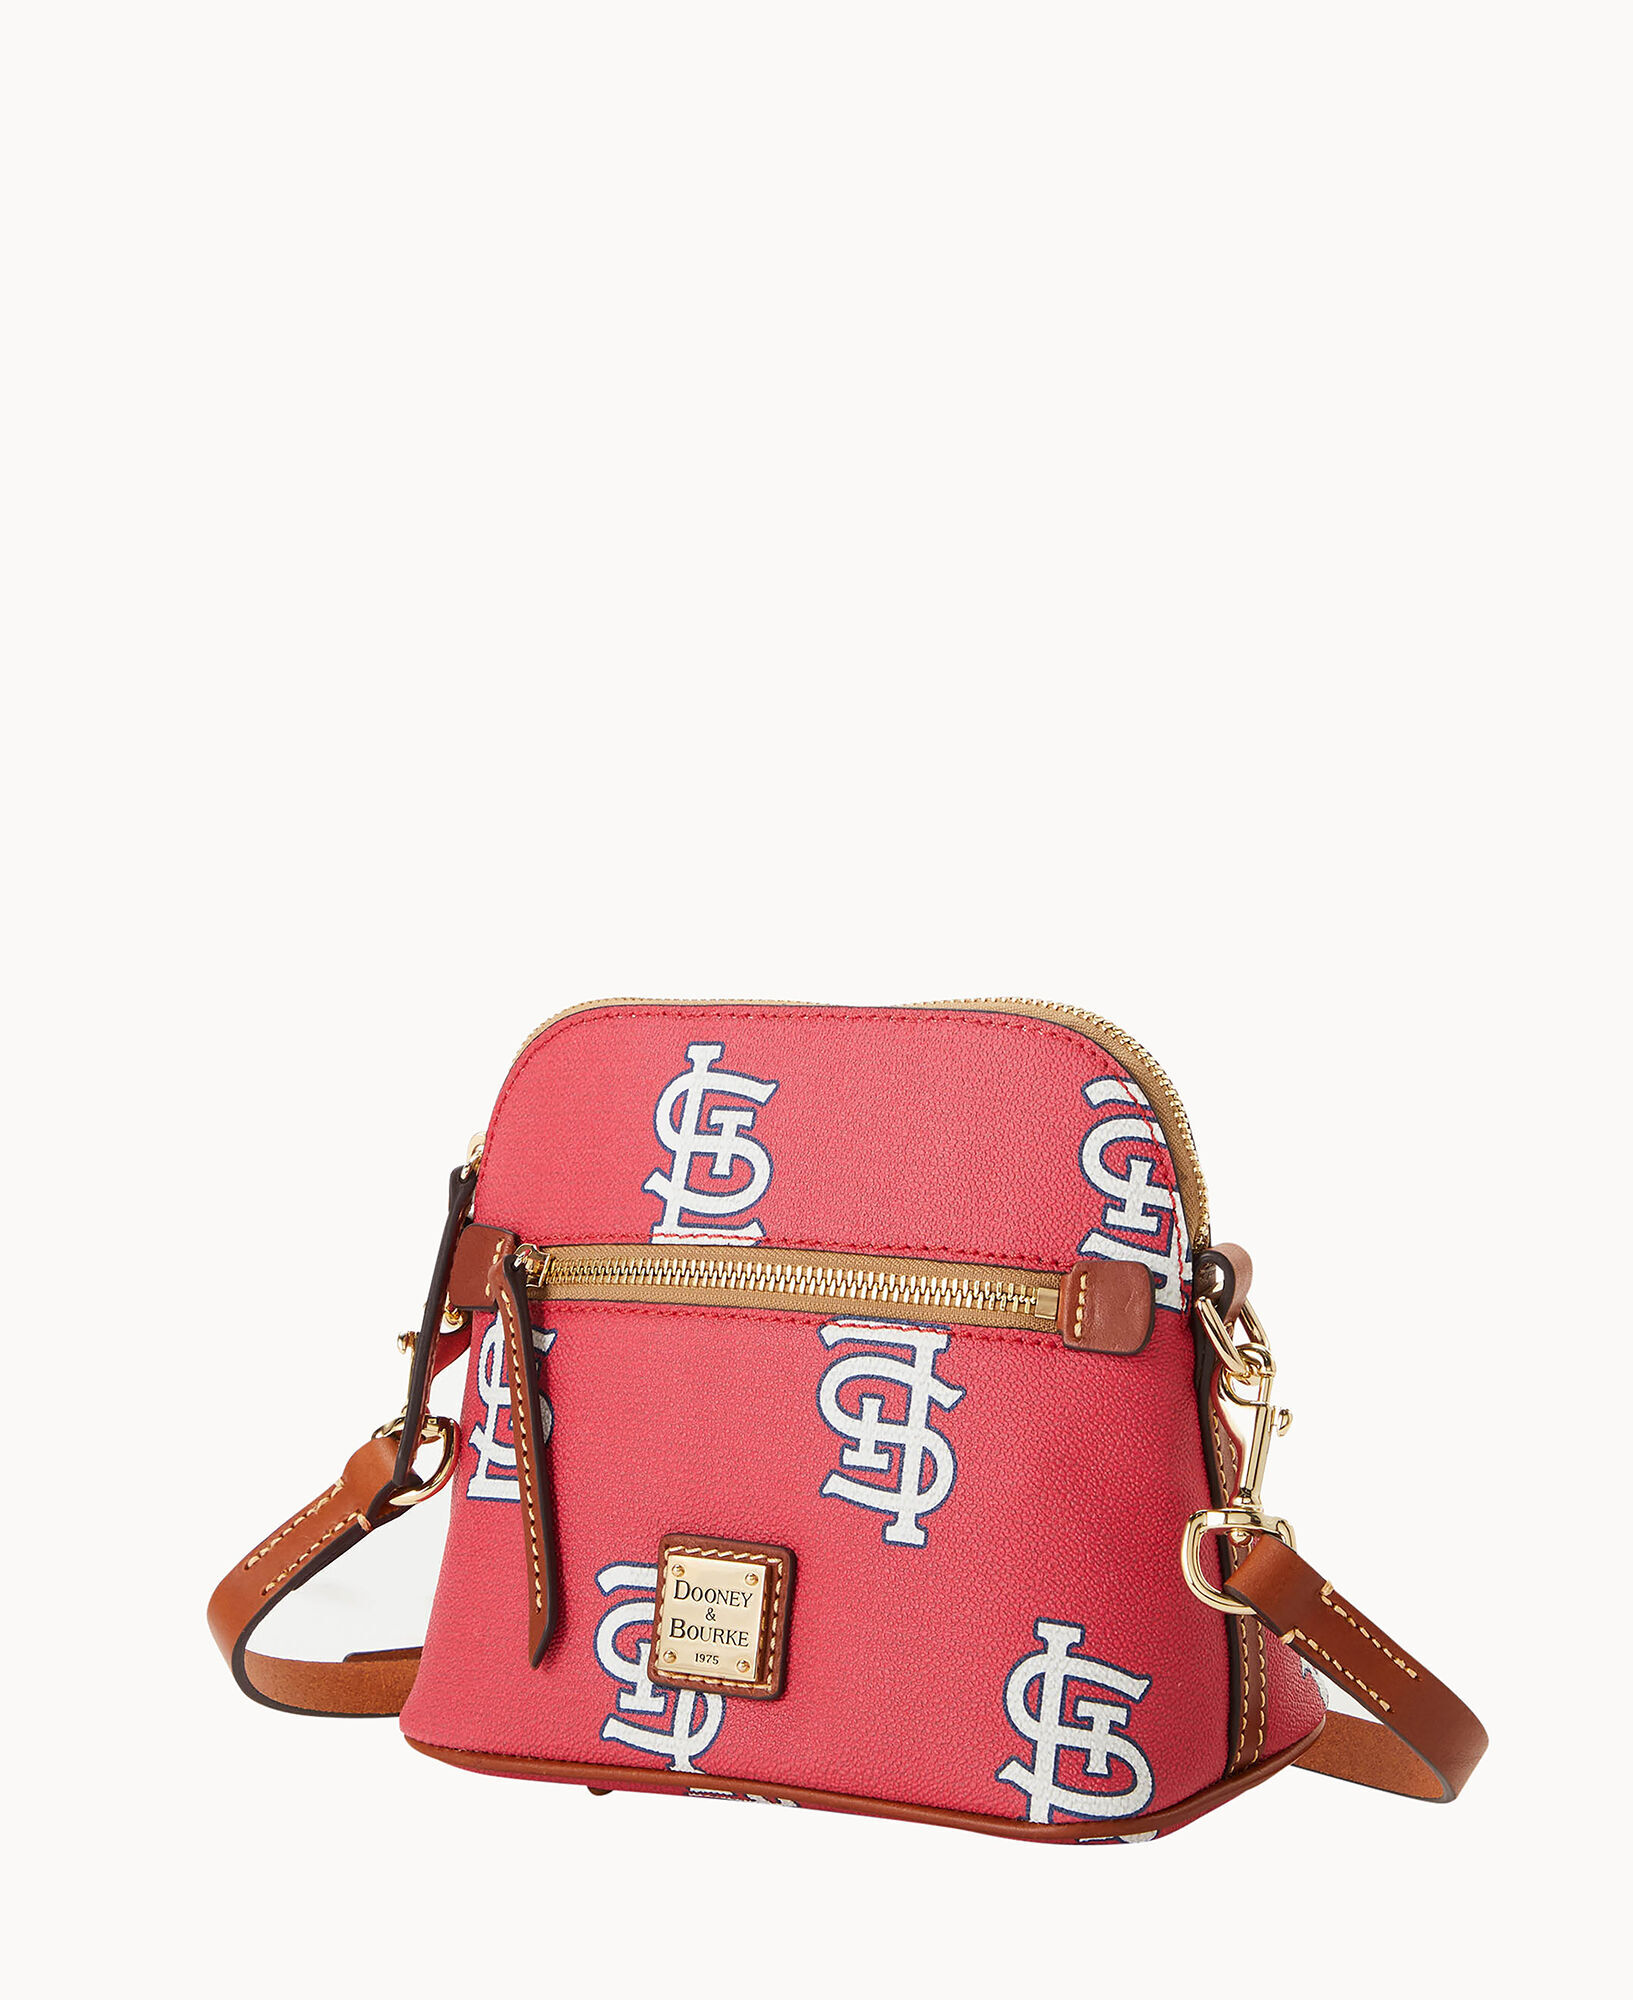 Dooney & Bourke St. Louis Cardinals Domed Crossbody Shoulder Bag